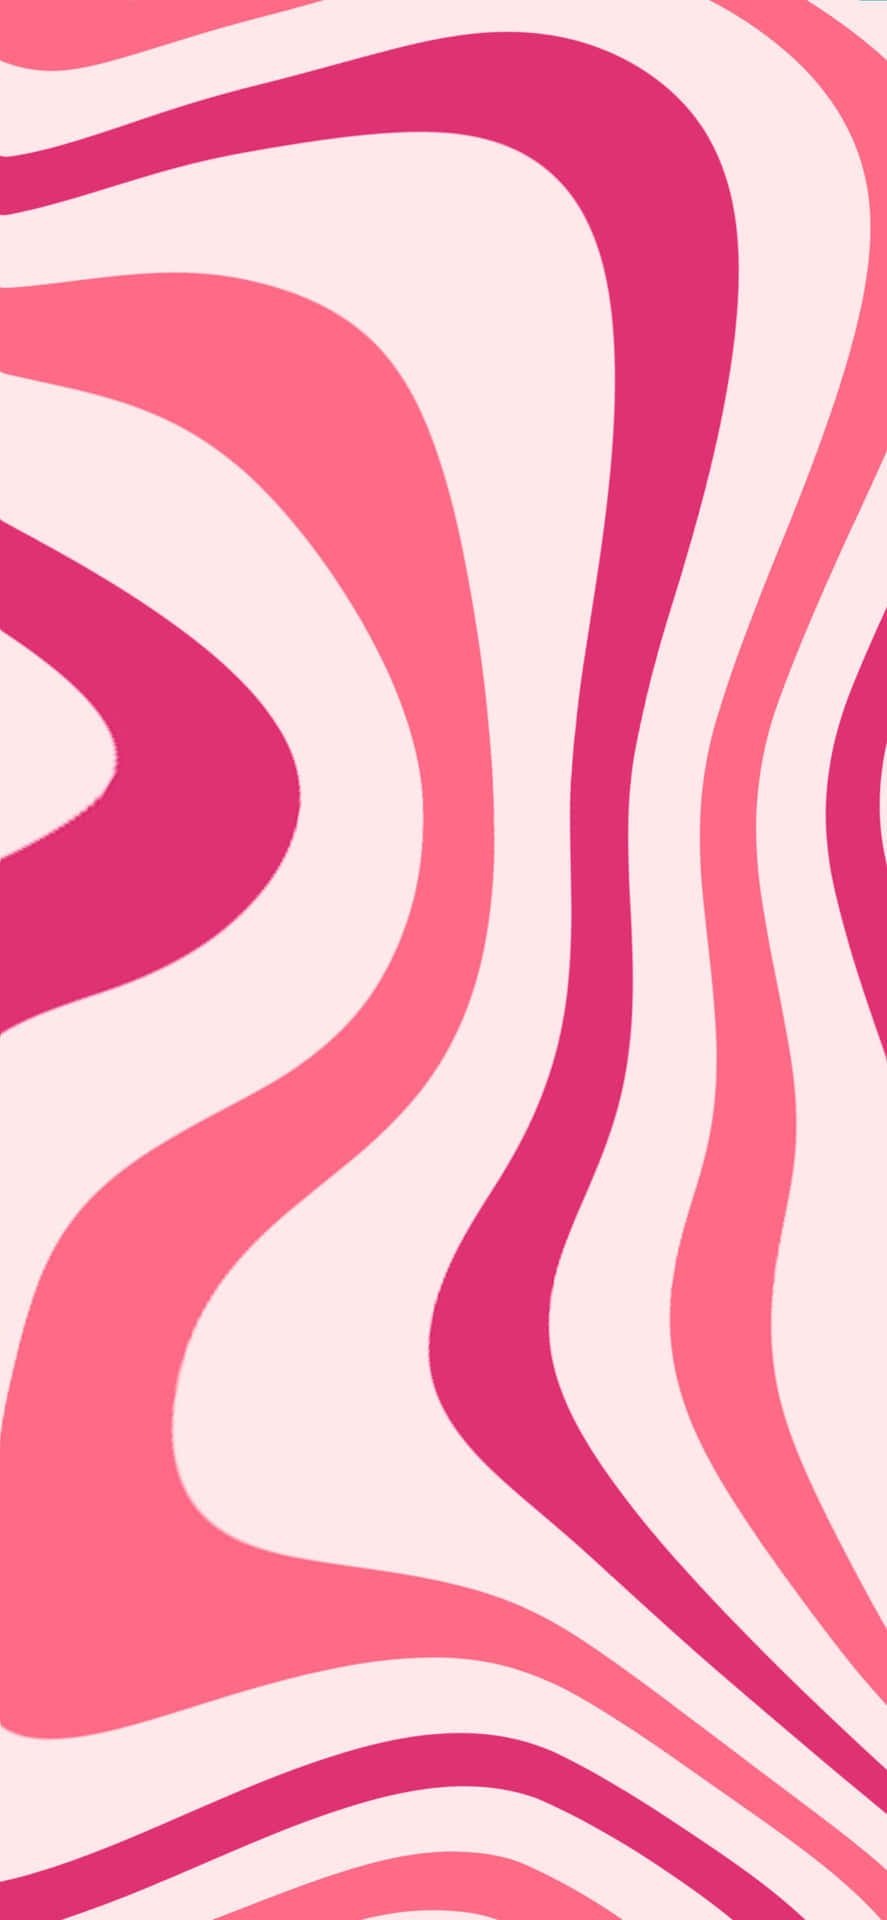 A mesmerizing swirl of vibrant pink